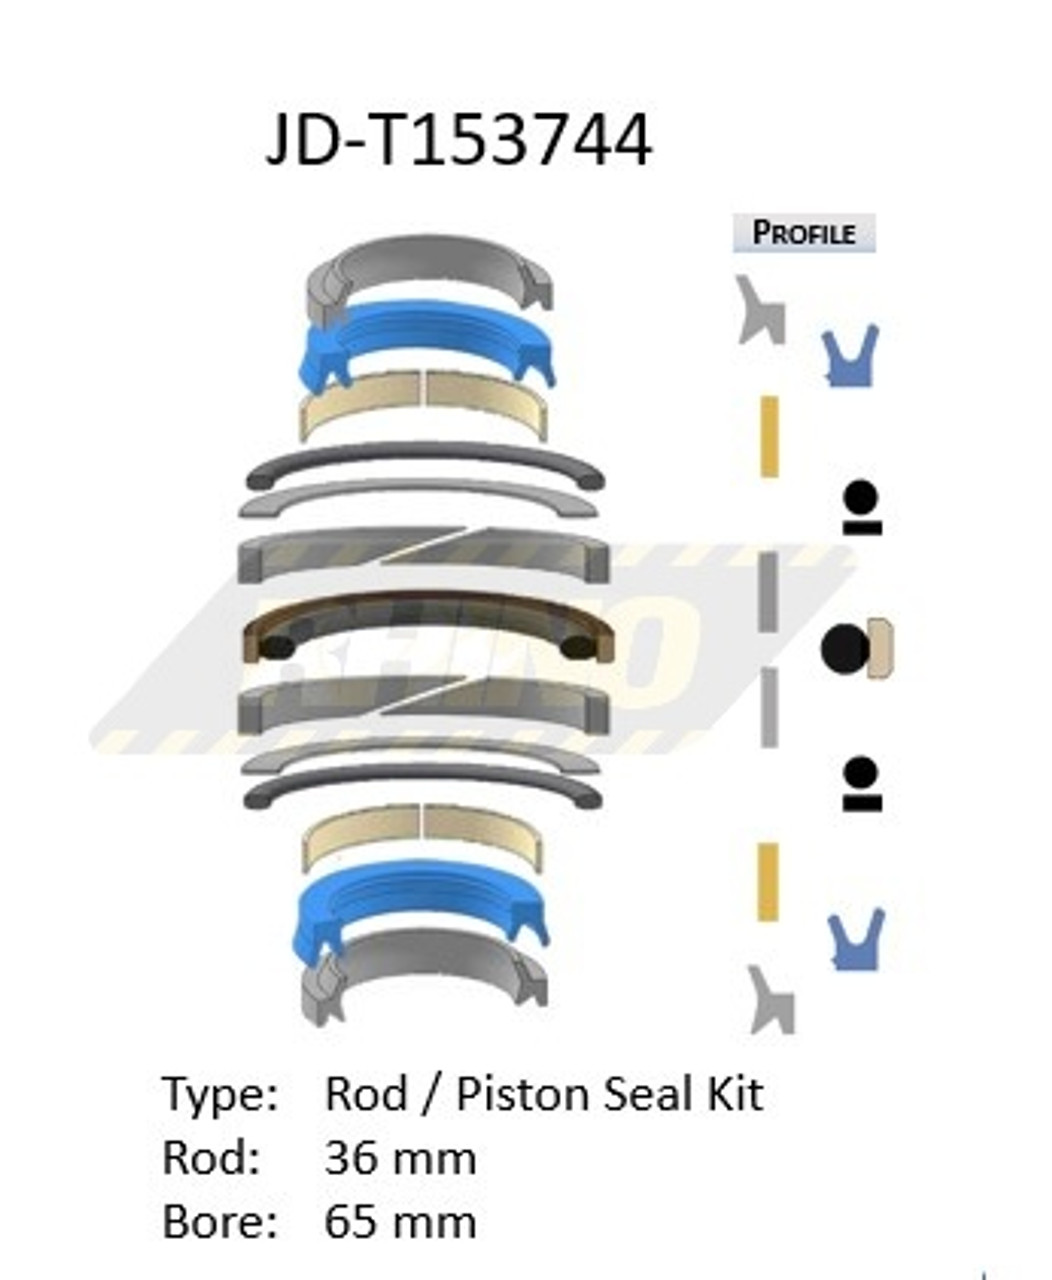 JD-T153744, John Deere Seal Kit